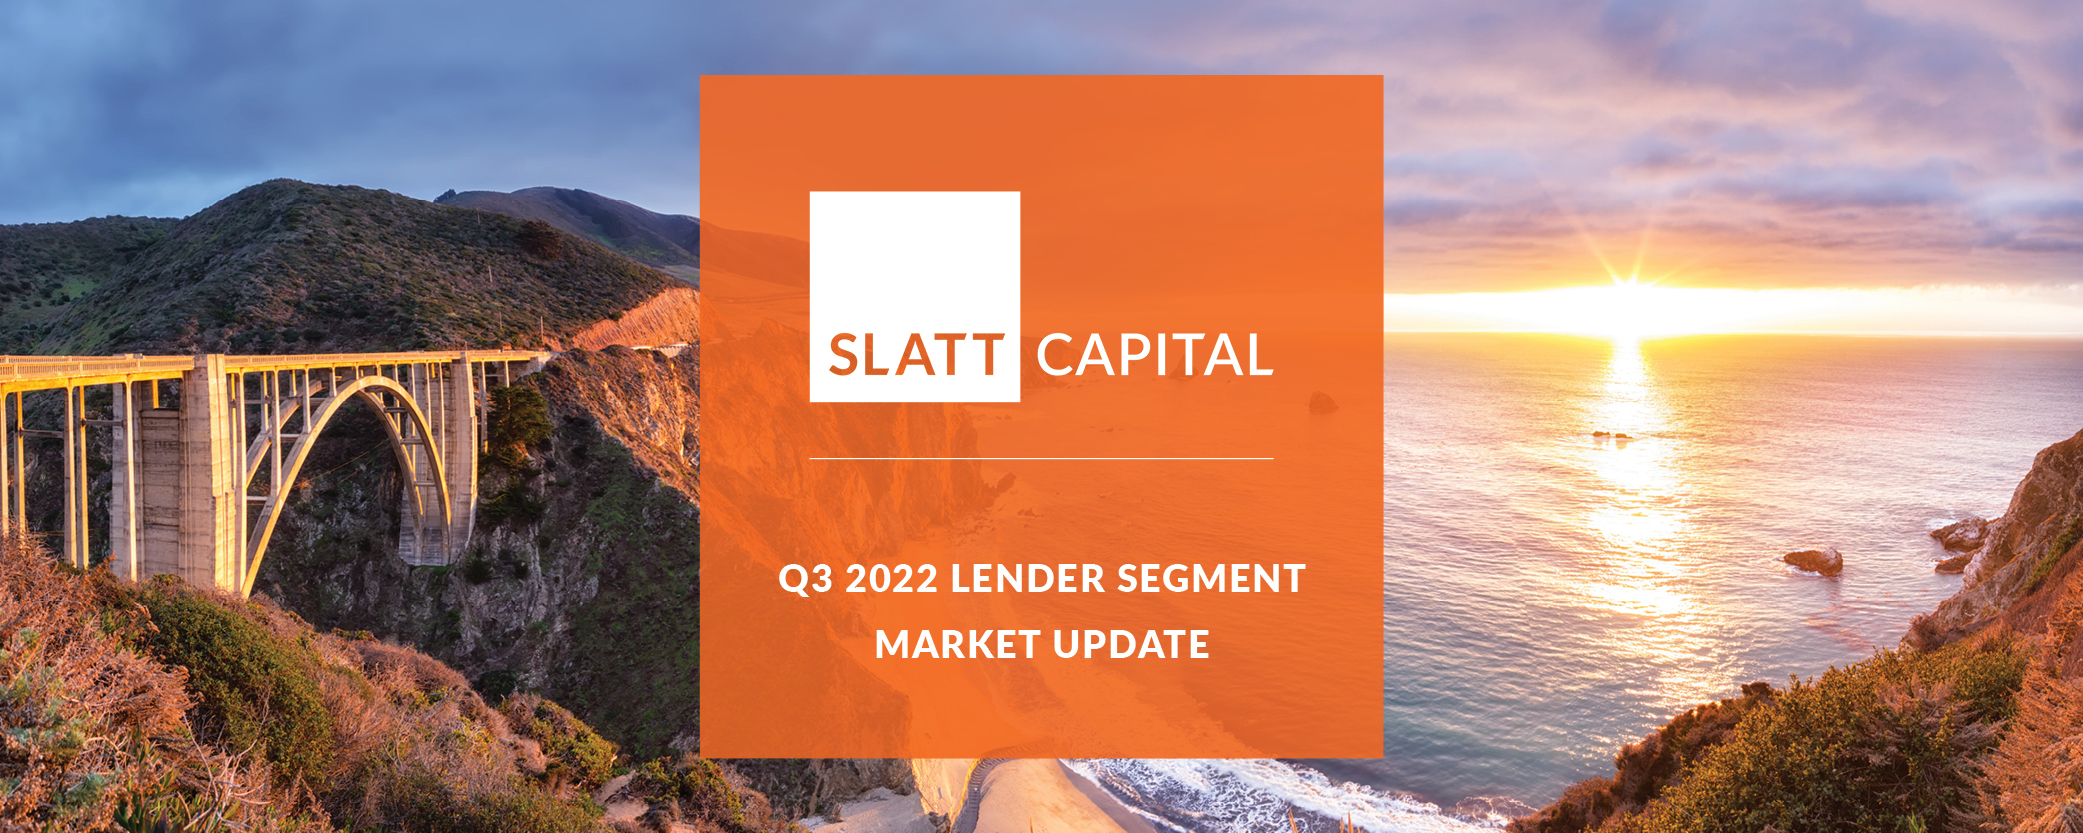 Q3 2022 lender segment market update